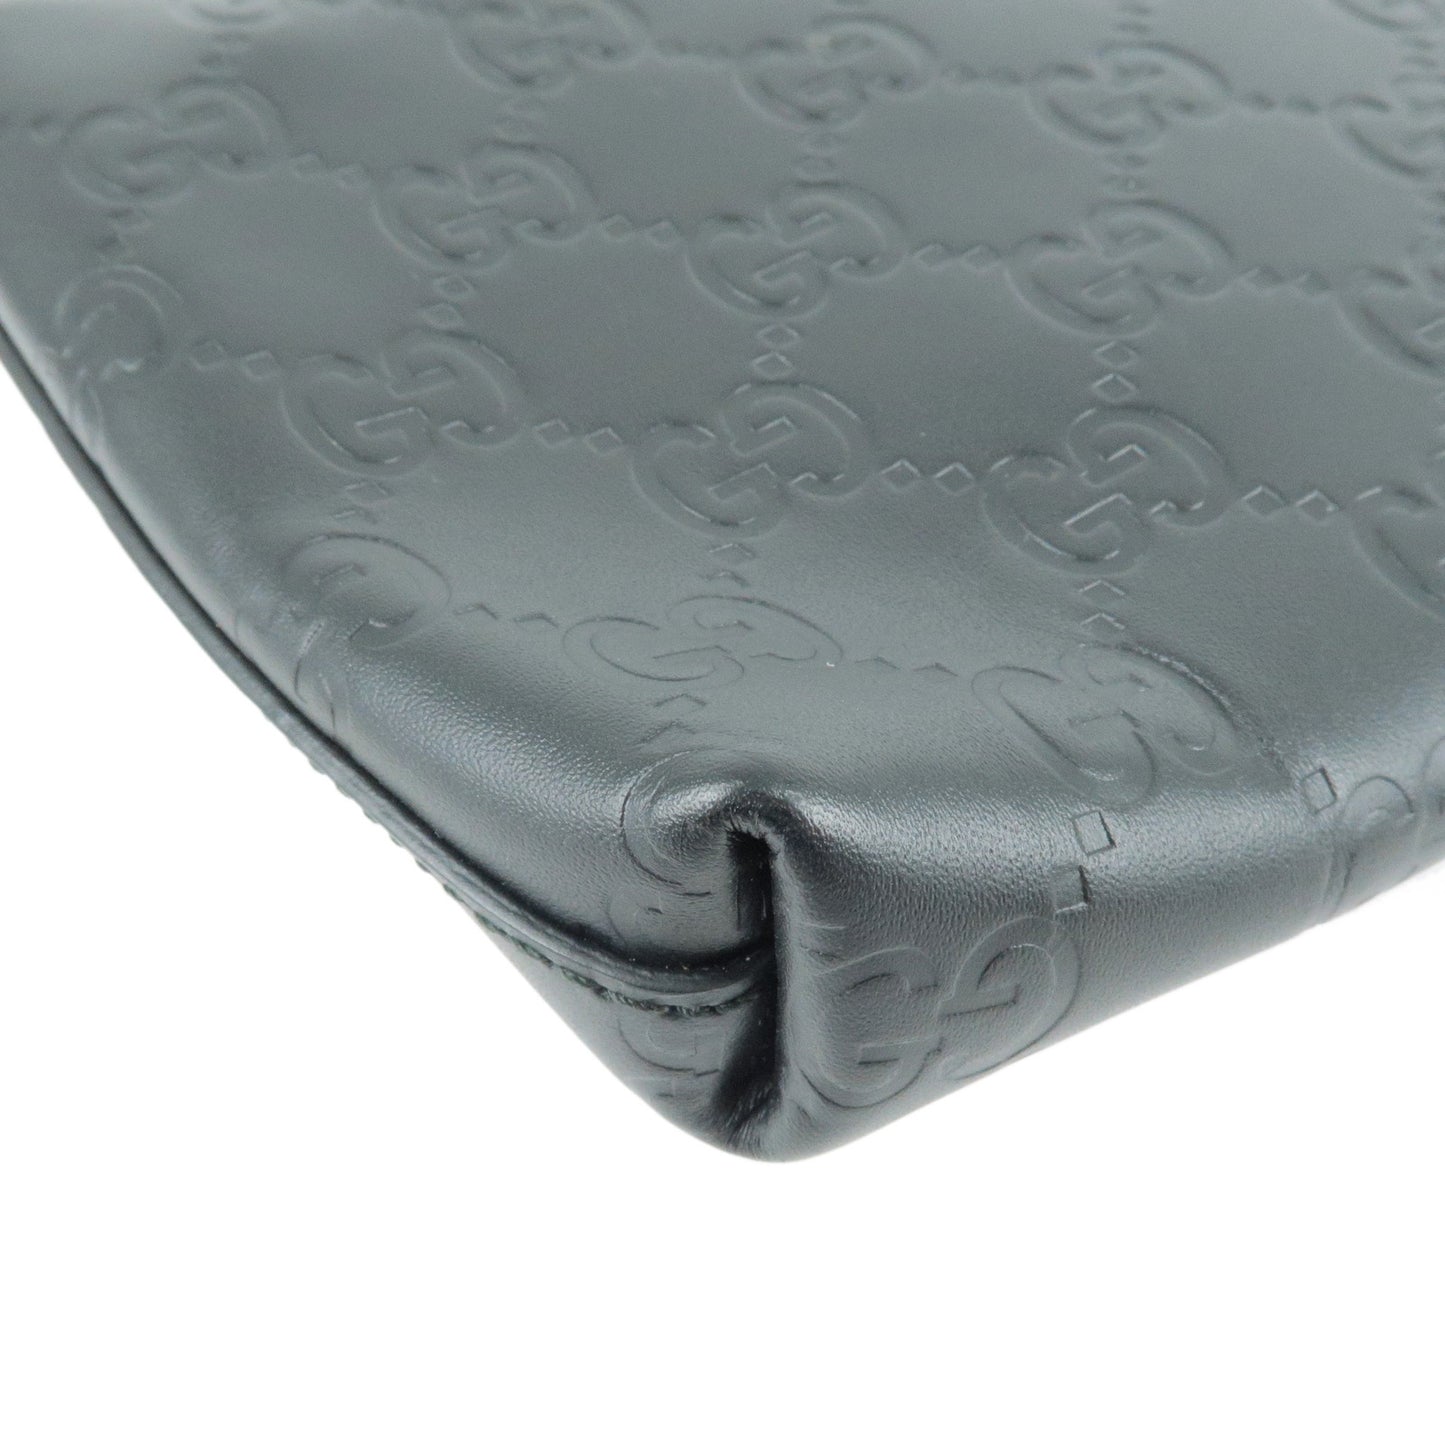 GUCCI Guccissima Leather Hand Bag Pouch Black 428449